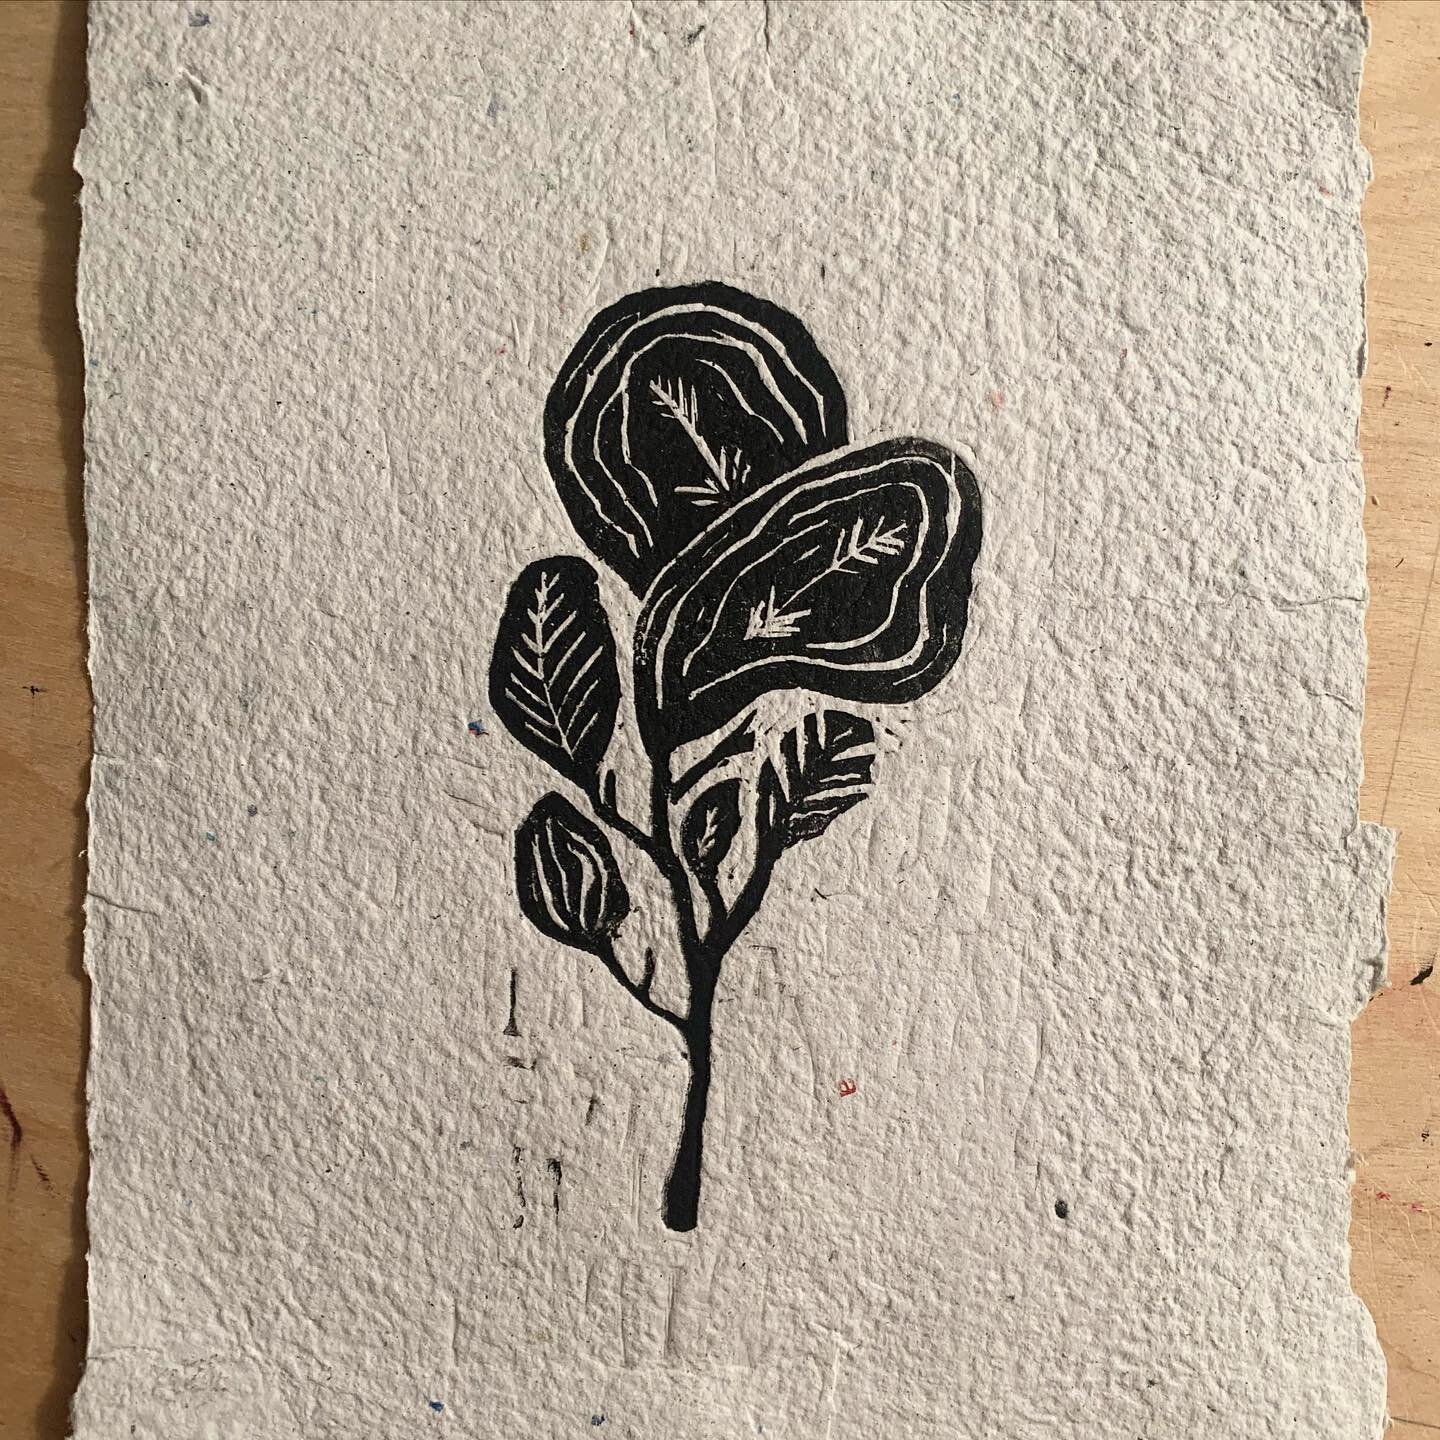 Thought I might try out a plant kinda thing.
-
-
-
-
-
-
#printmaking #reliefprint #reliefprintmaking  #illustration  #art #blackandwhite #blackandwhiteartworking #homeprinting #linocut #lino #linocutprint #printmaker #printmakersofinstagram #tattoo 